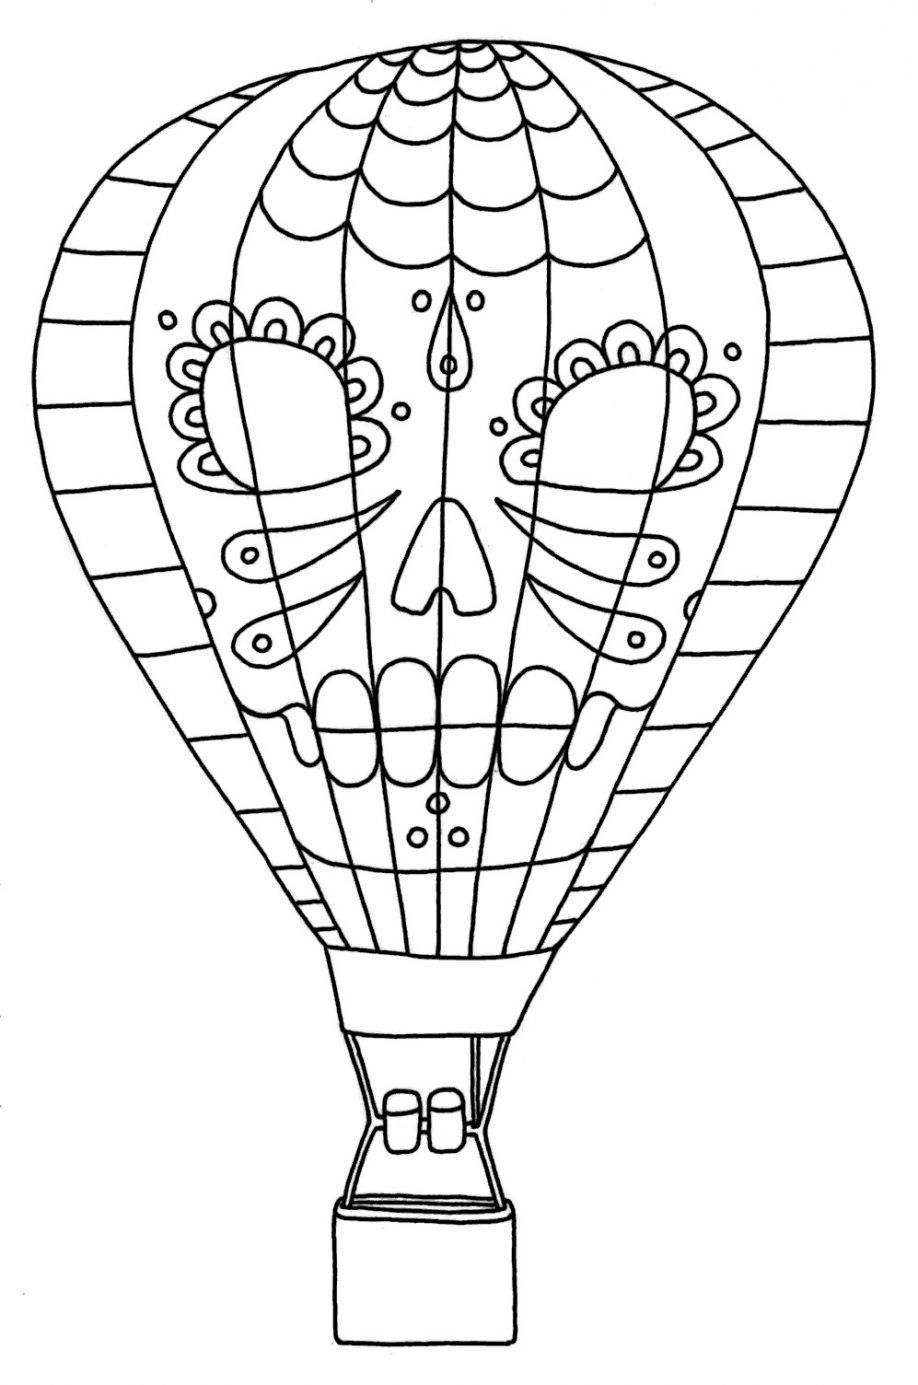 Balloon Coloring Page Printable Hot Air Balloon Coloring Page ...